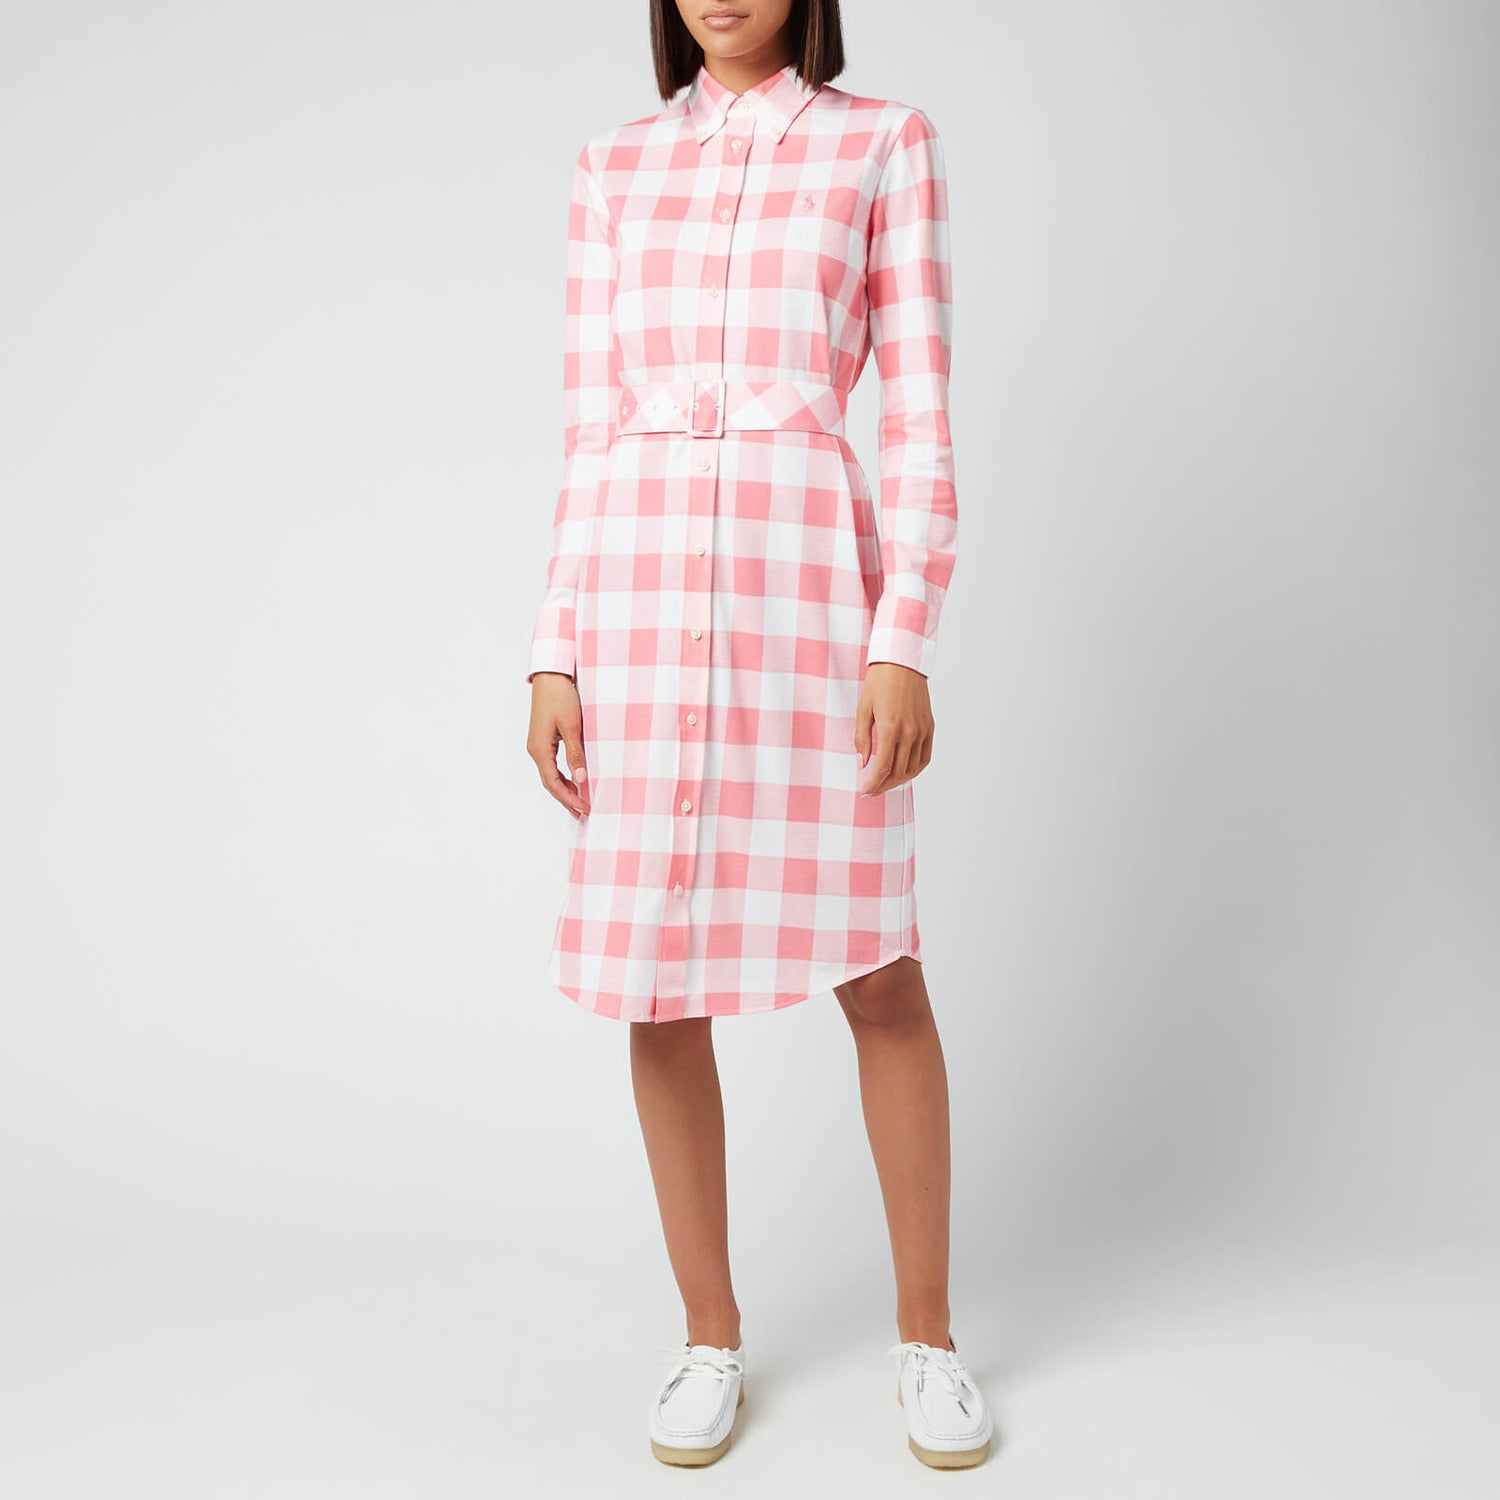 Polo Ralph Lauren Women's Heidi Shirt Dress - Ribbon Pink/White